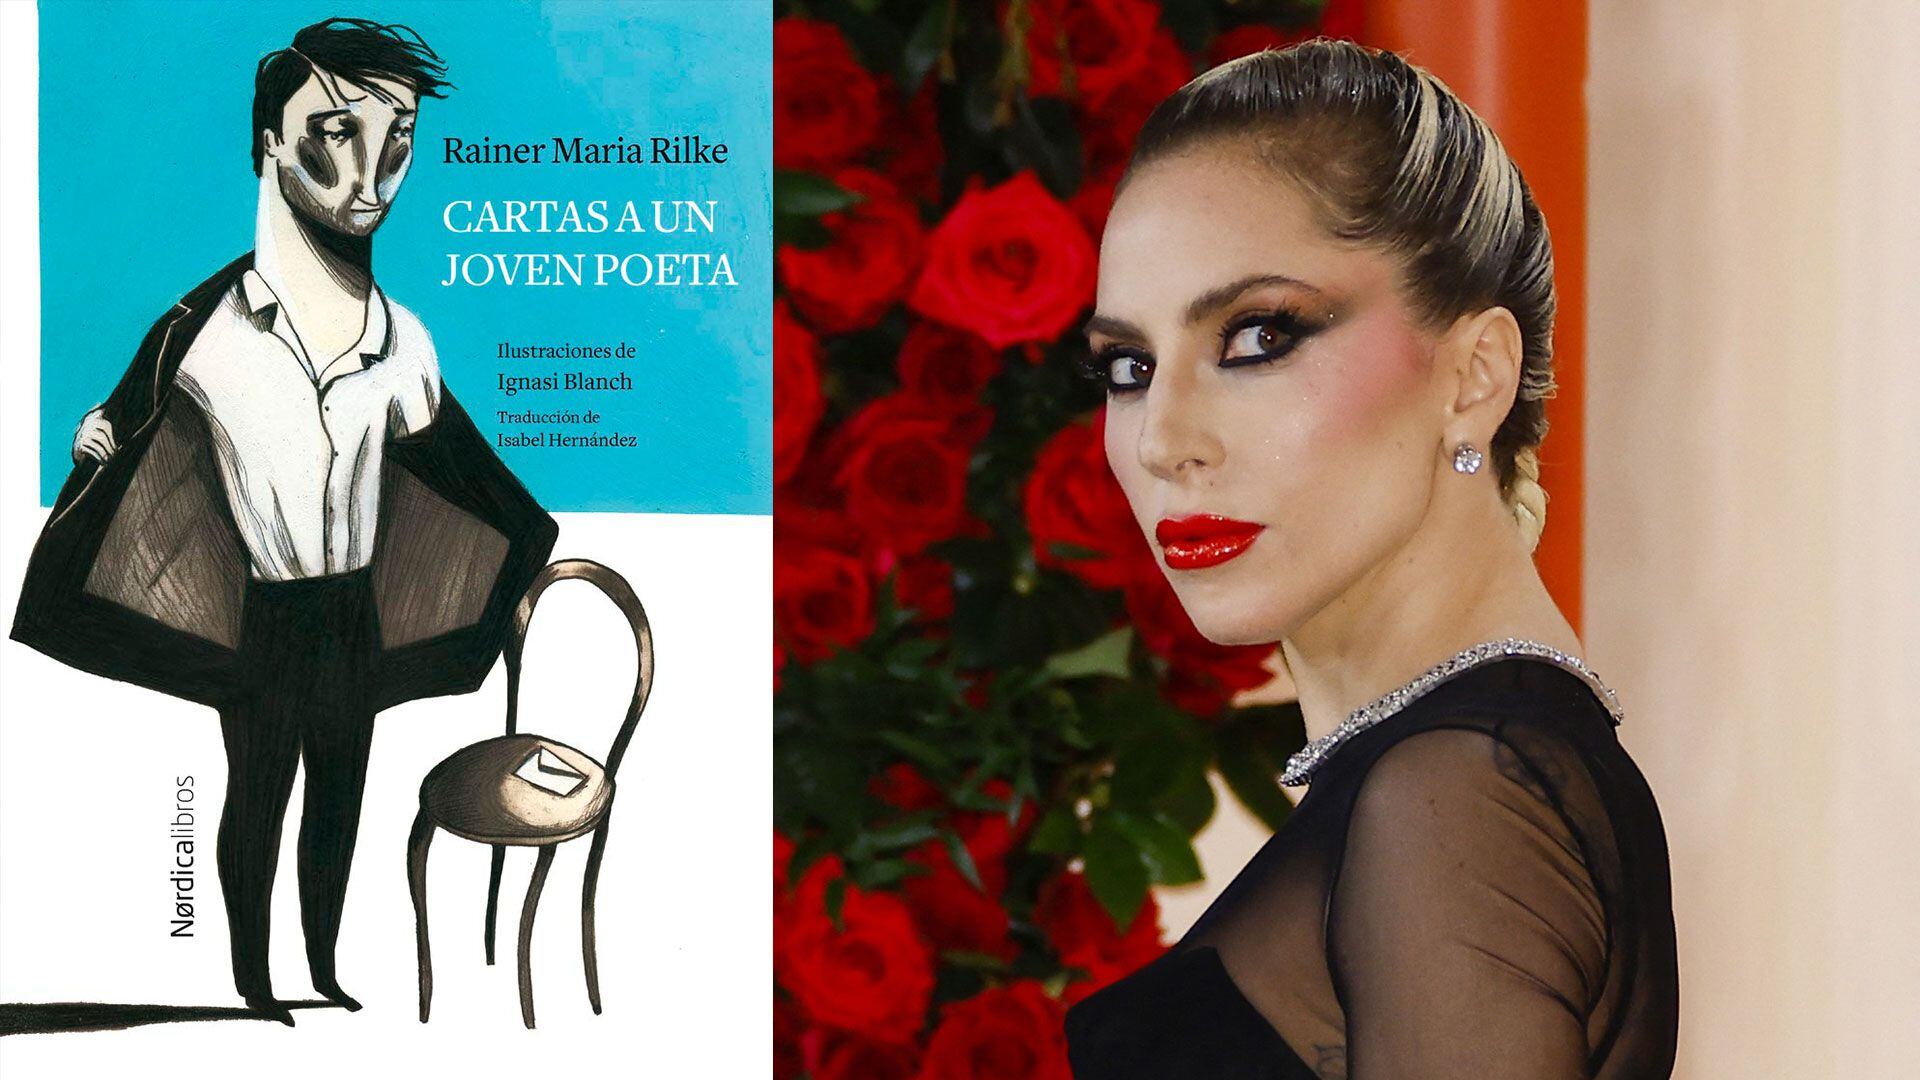 Lady Gaga -“Cartas a un joven poeta” (Rainer Maria Rilke)